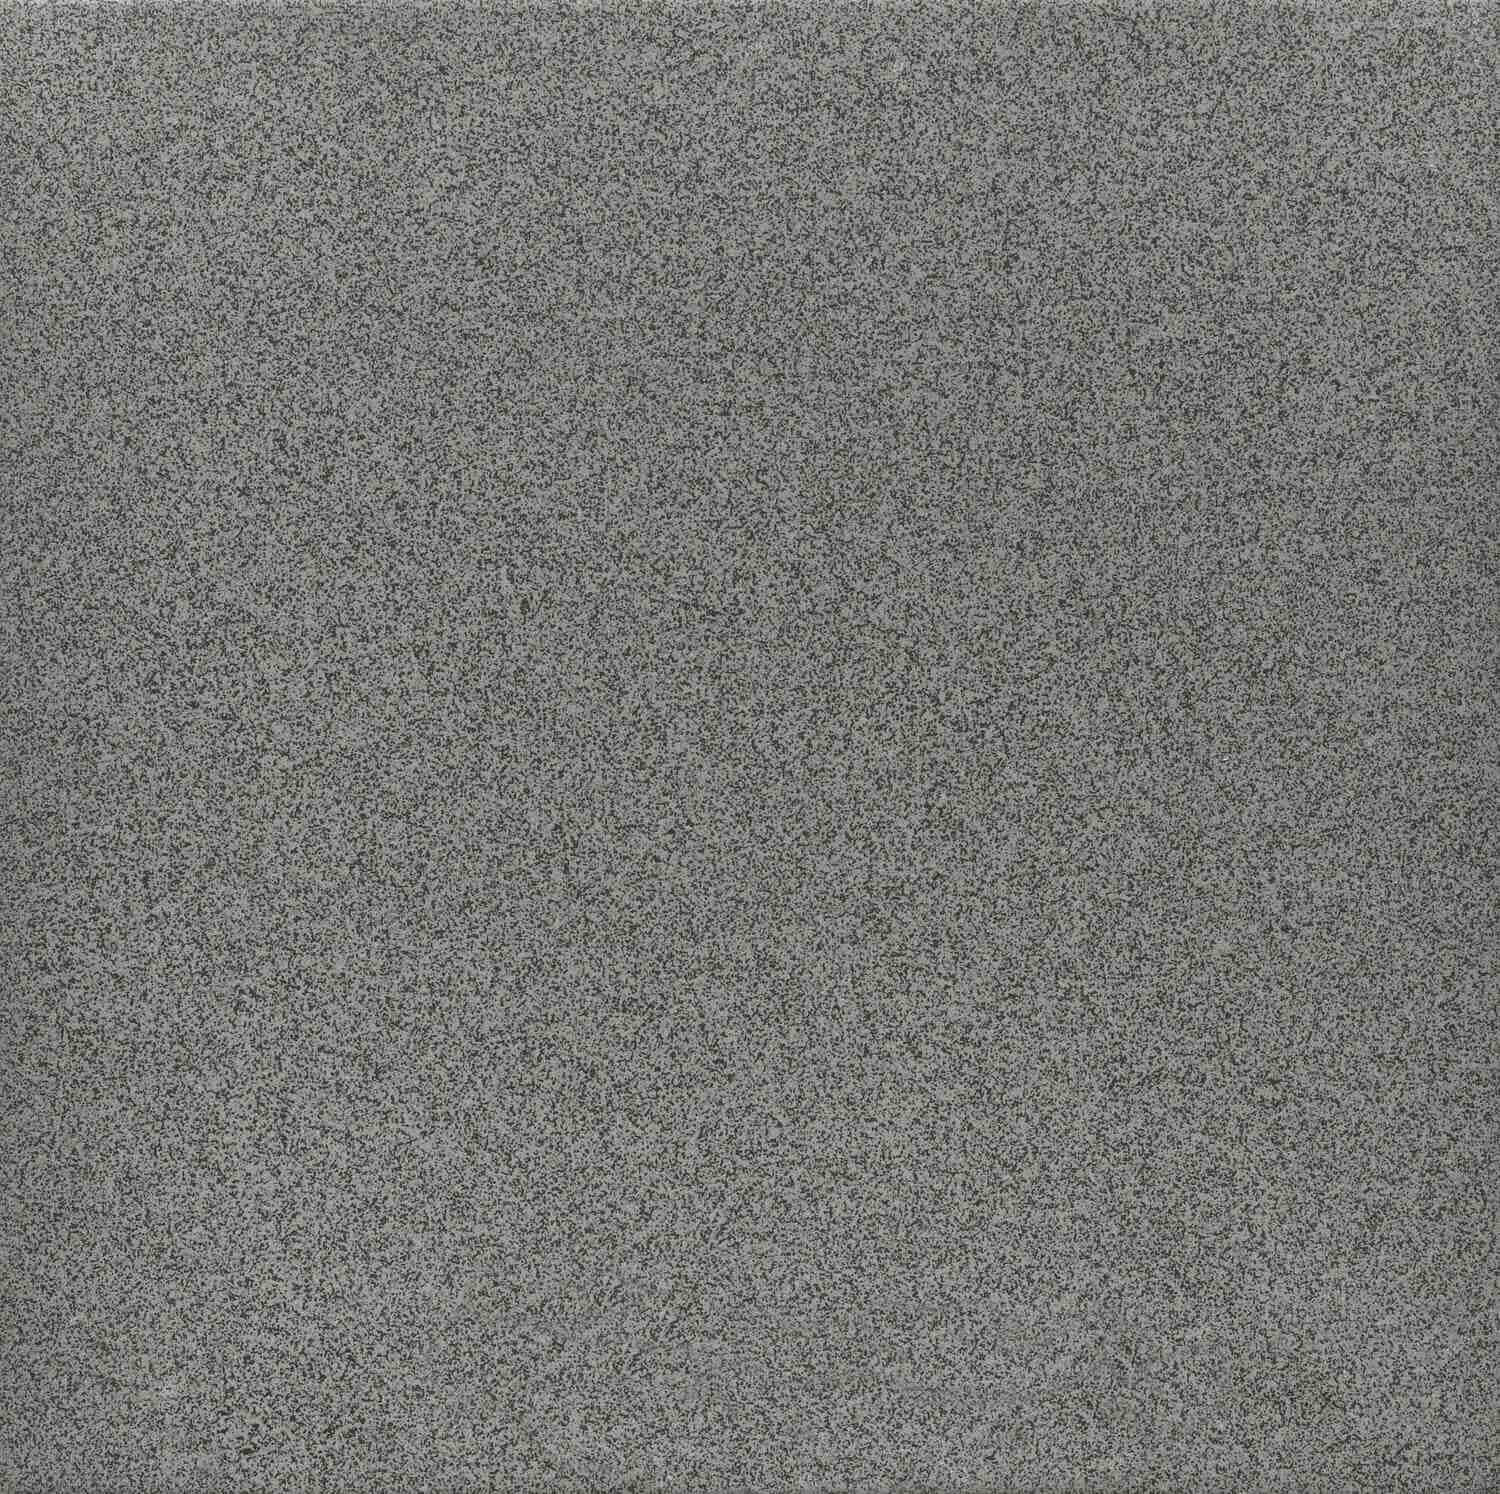 Dorset Woolliscroft Flat Dark Grey Slip Resistant Quarry Tile 148x148mm